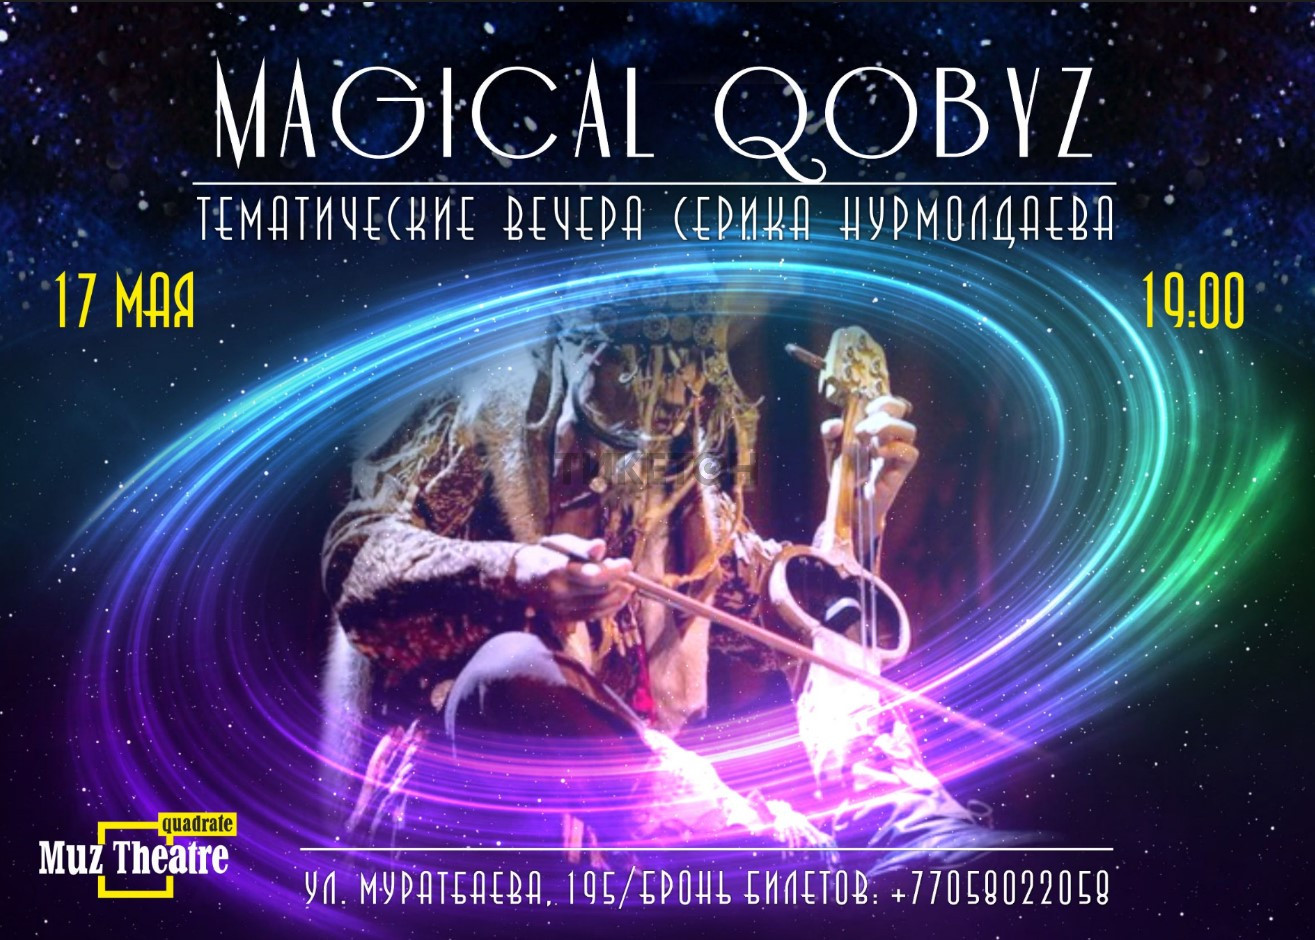 Magical Qobyz